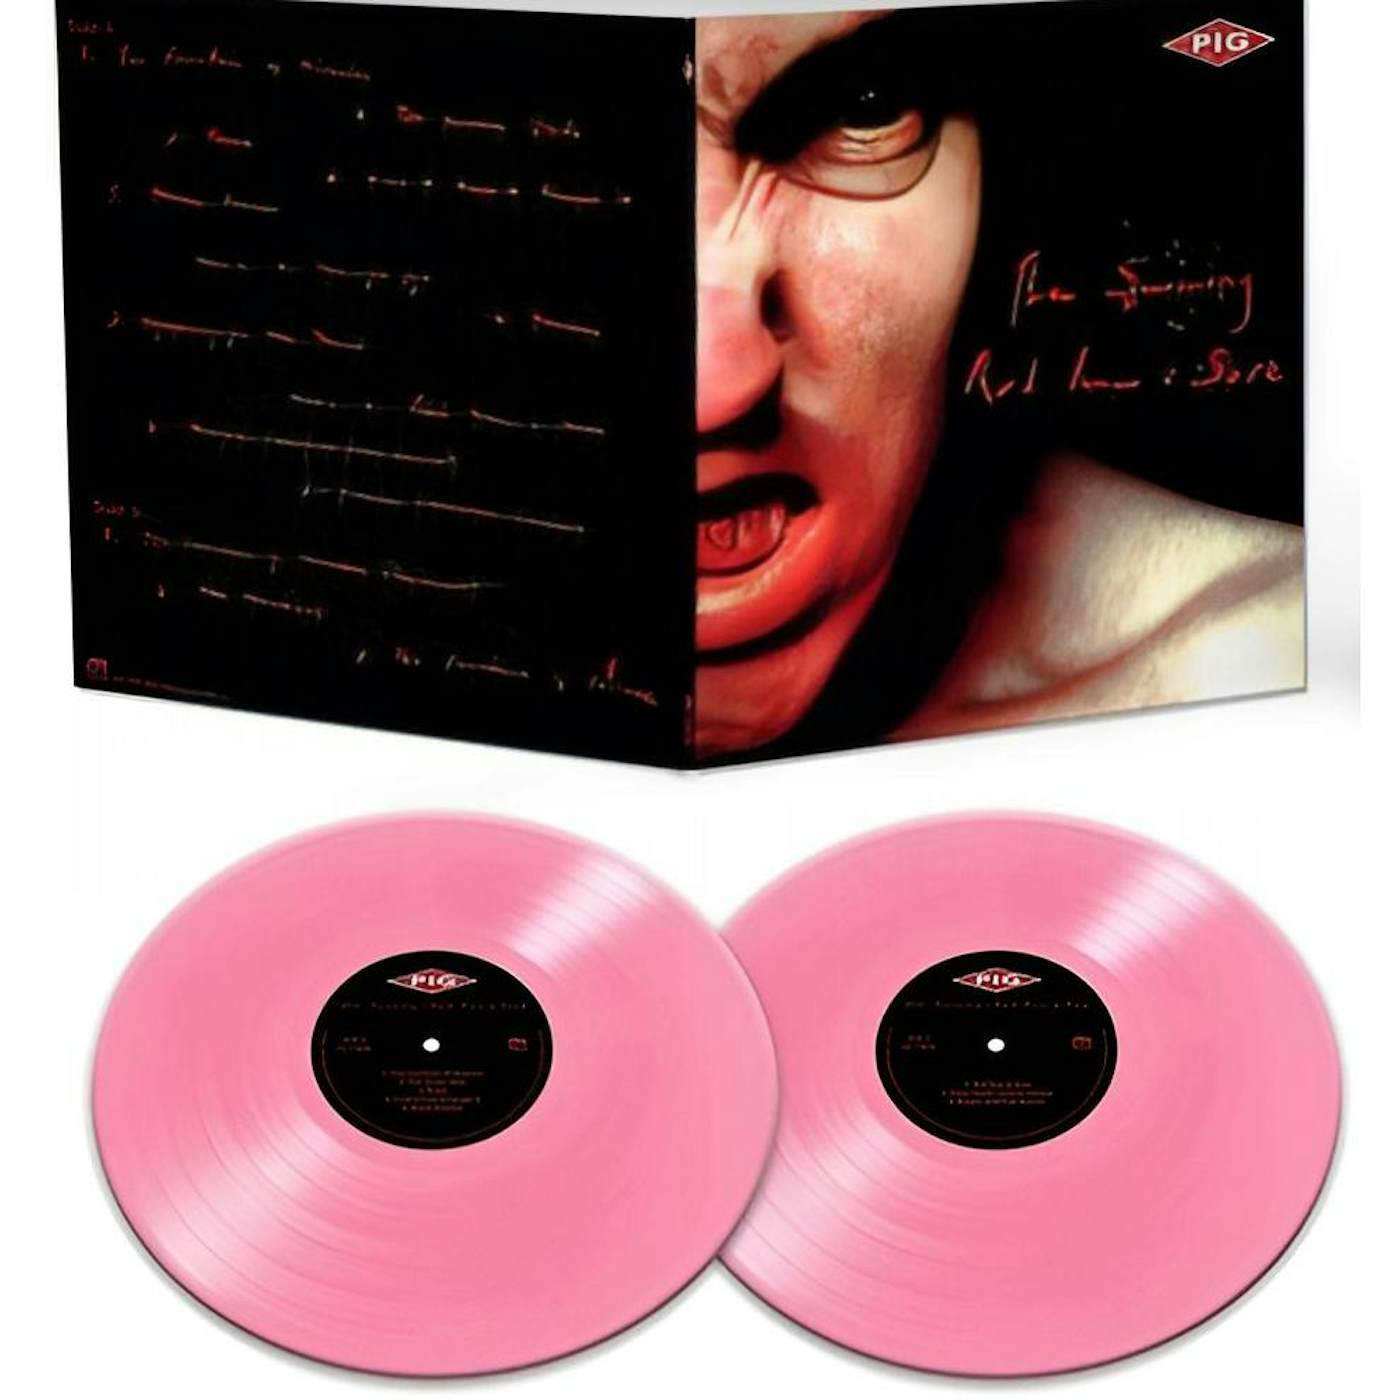 PIG SWINING / RED RAW & SORE (PINK VINYL) Vinyl Record